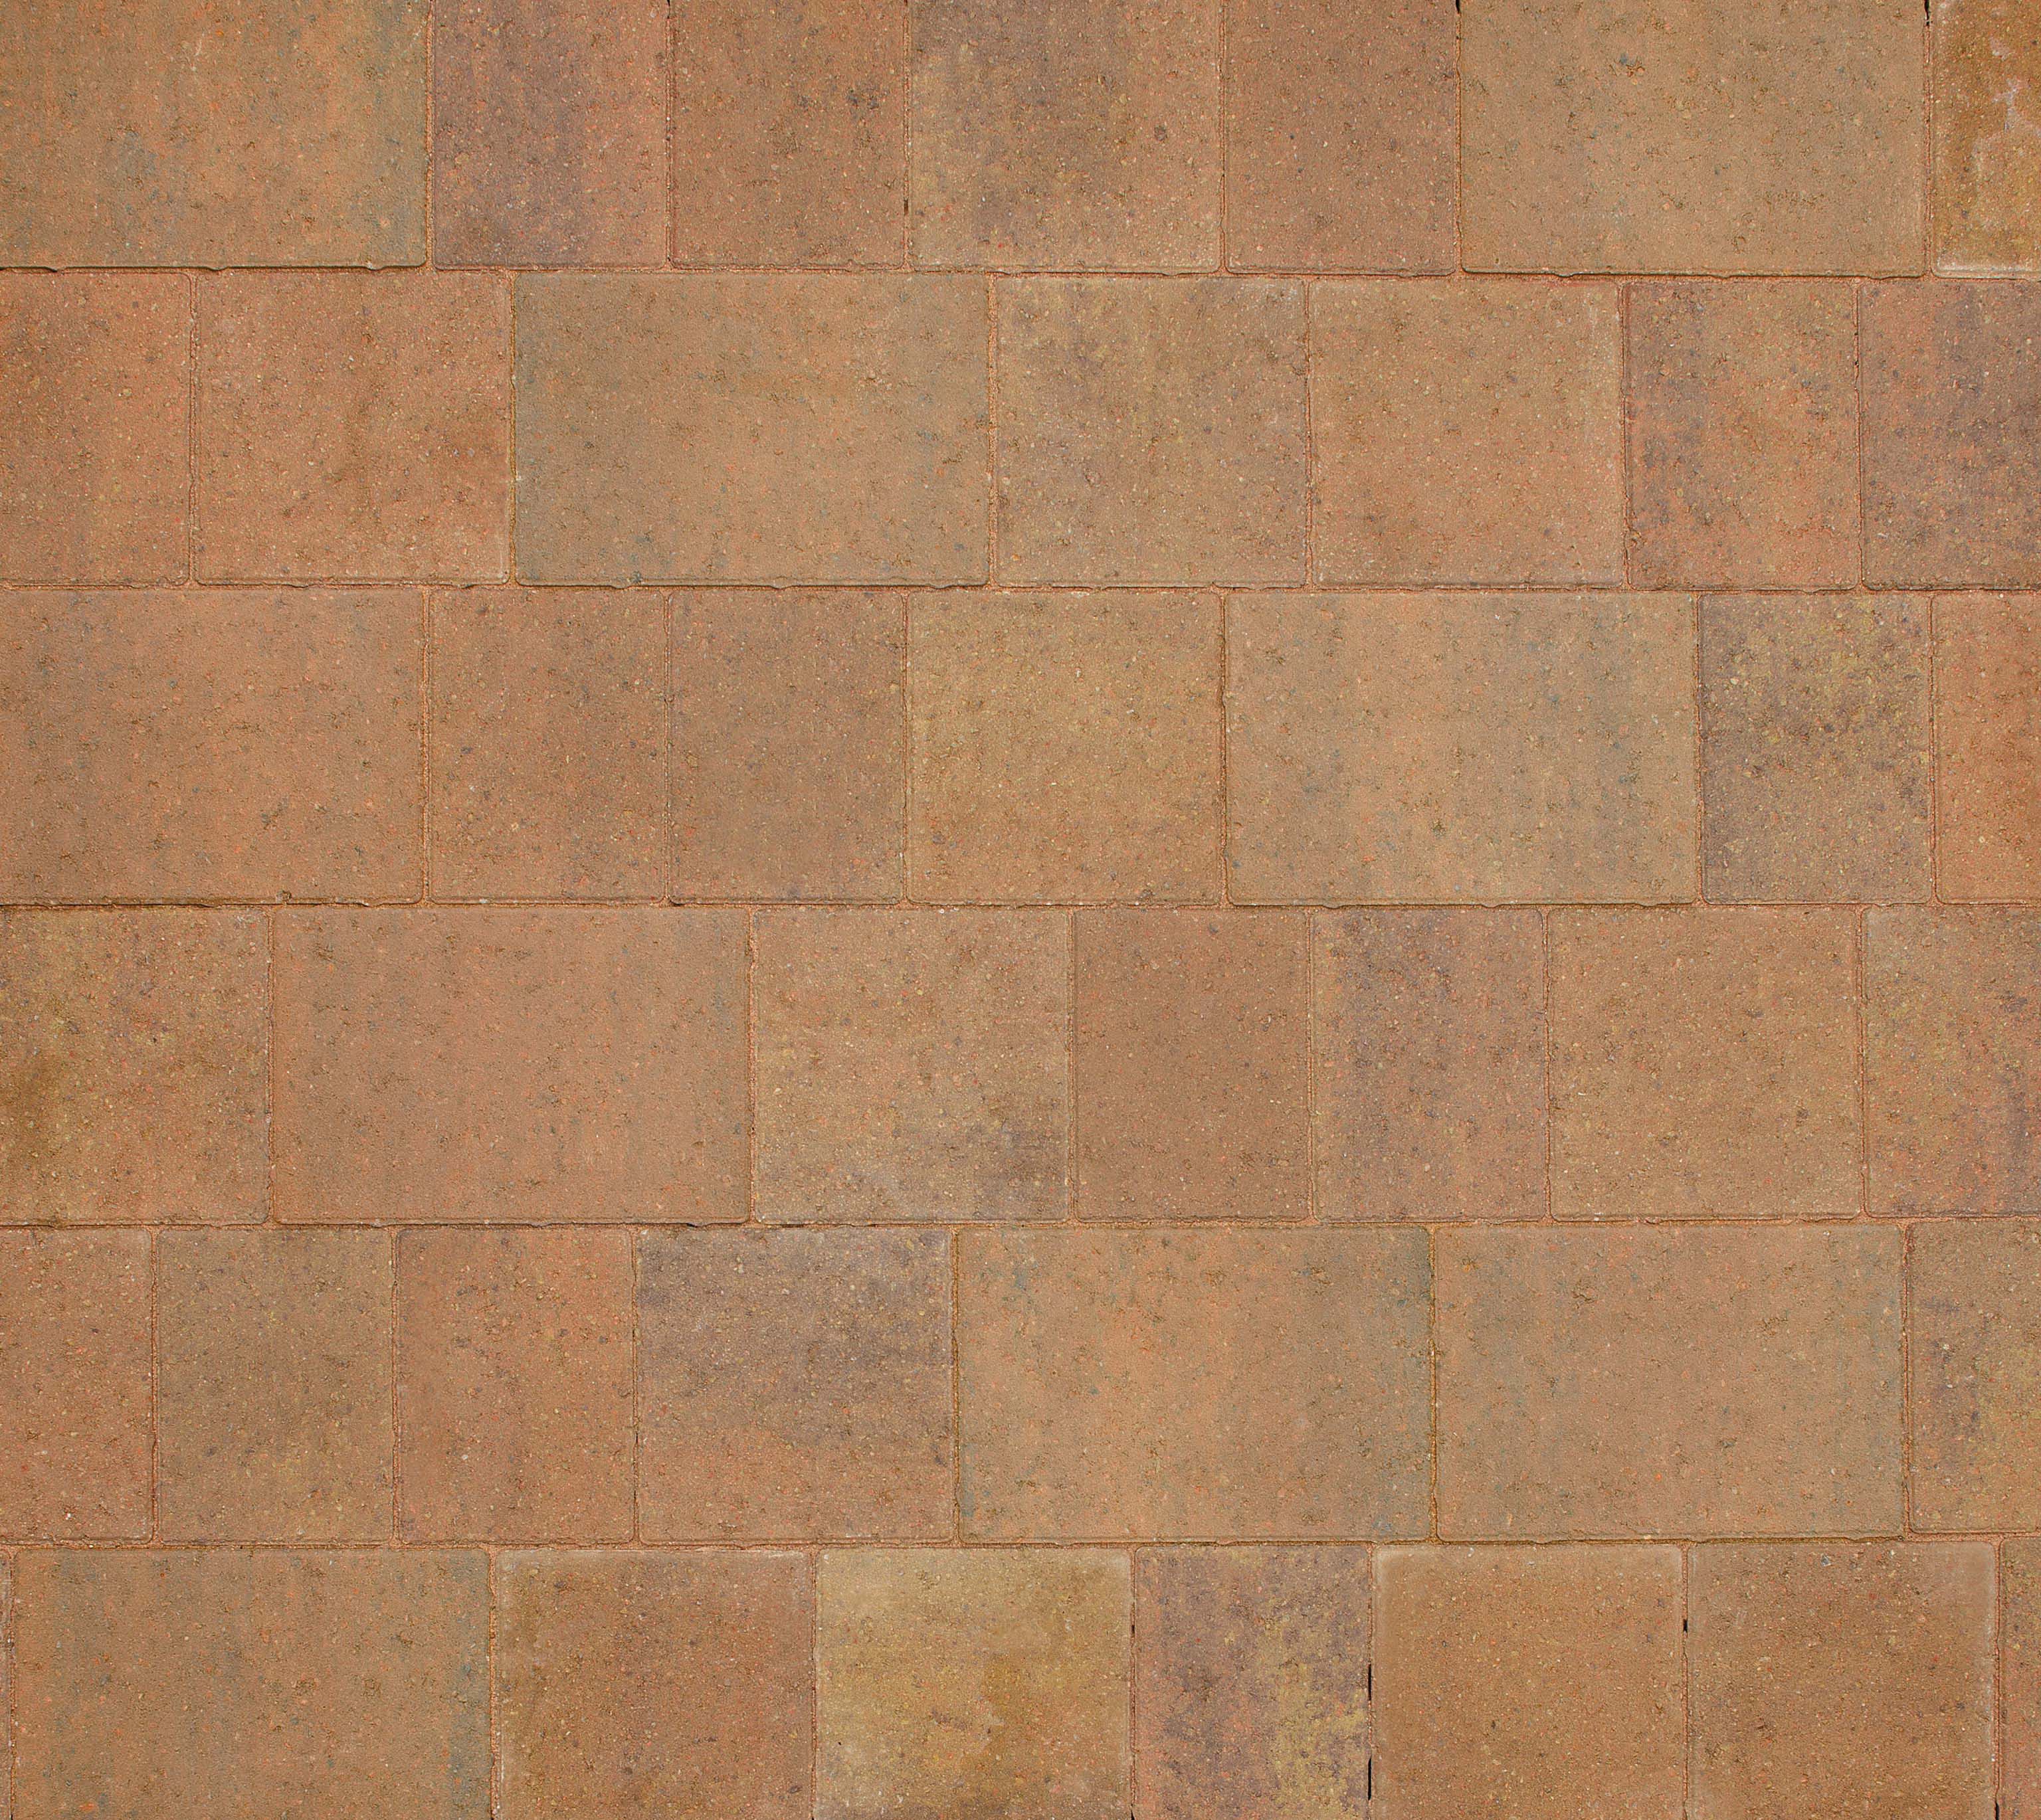 Image of Marshalls Drivesett Savanna Textured Autumn Driveway Block Paving - Sample